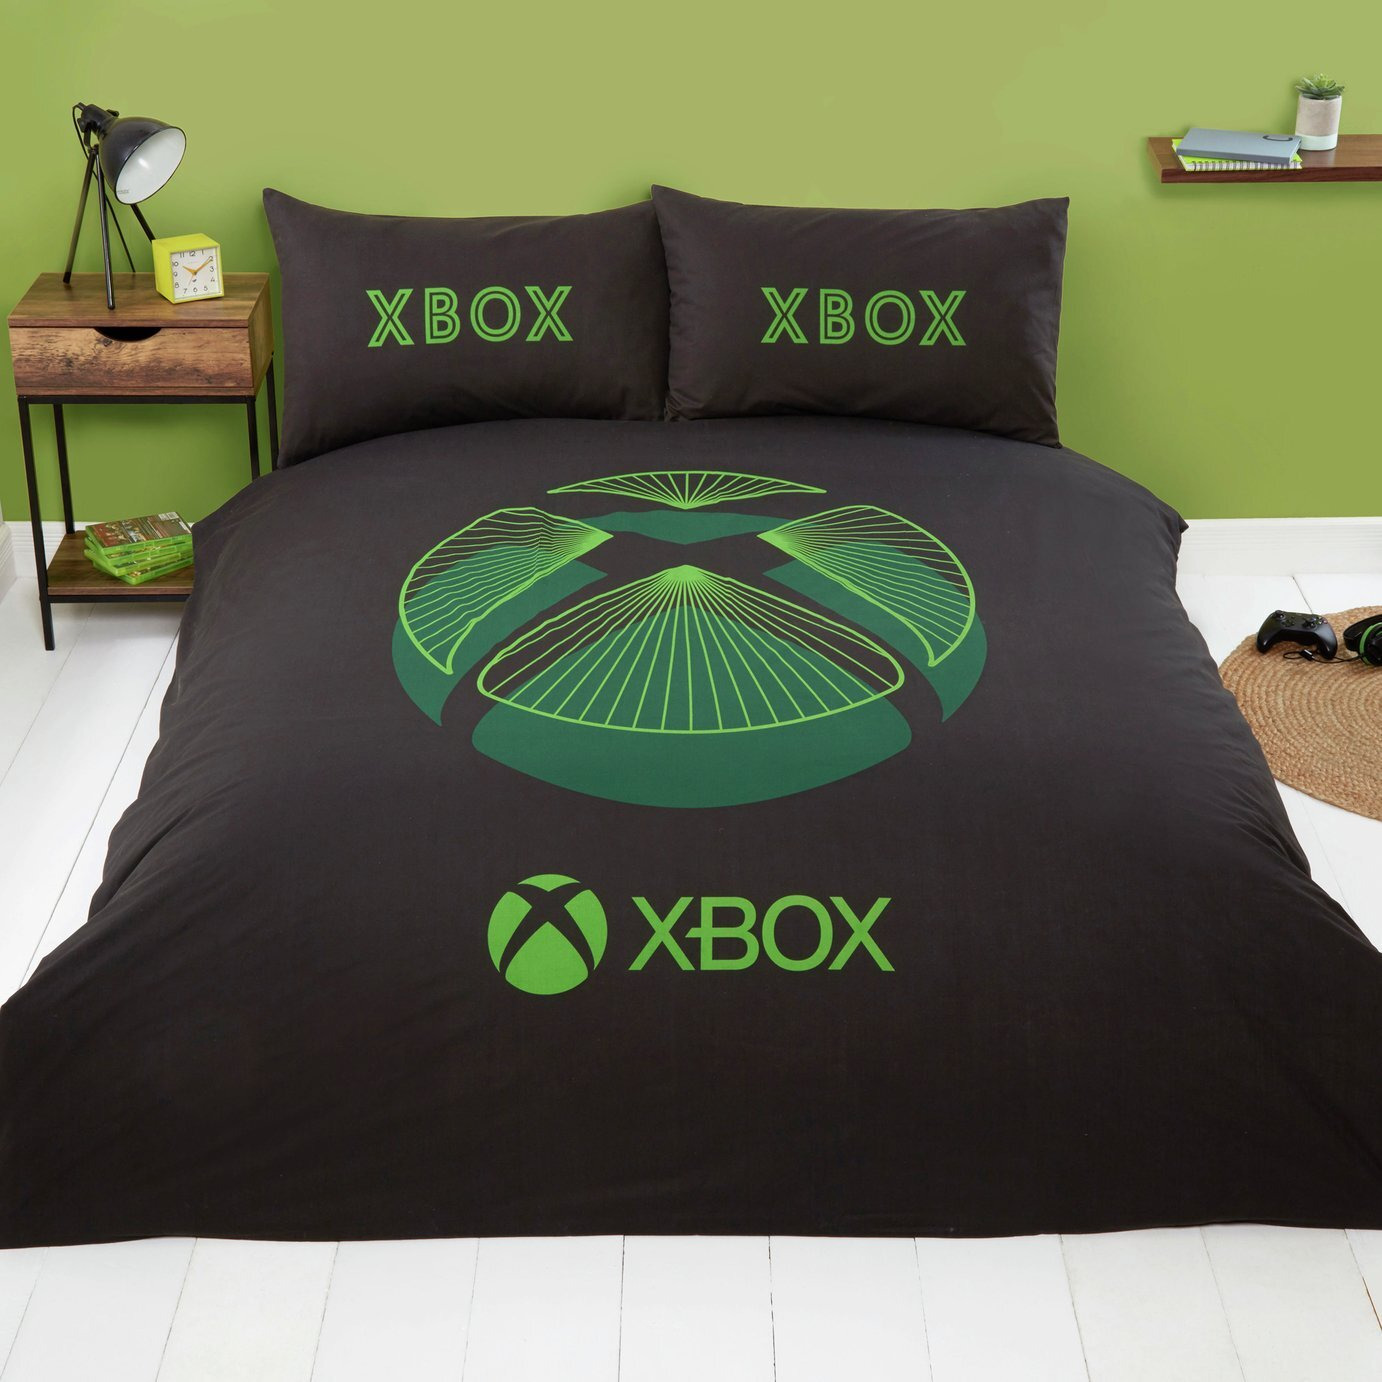 Xbox New Black Kids Bedding Set - Double - image 1